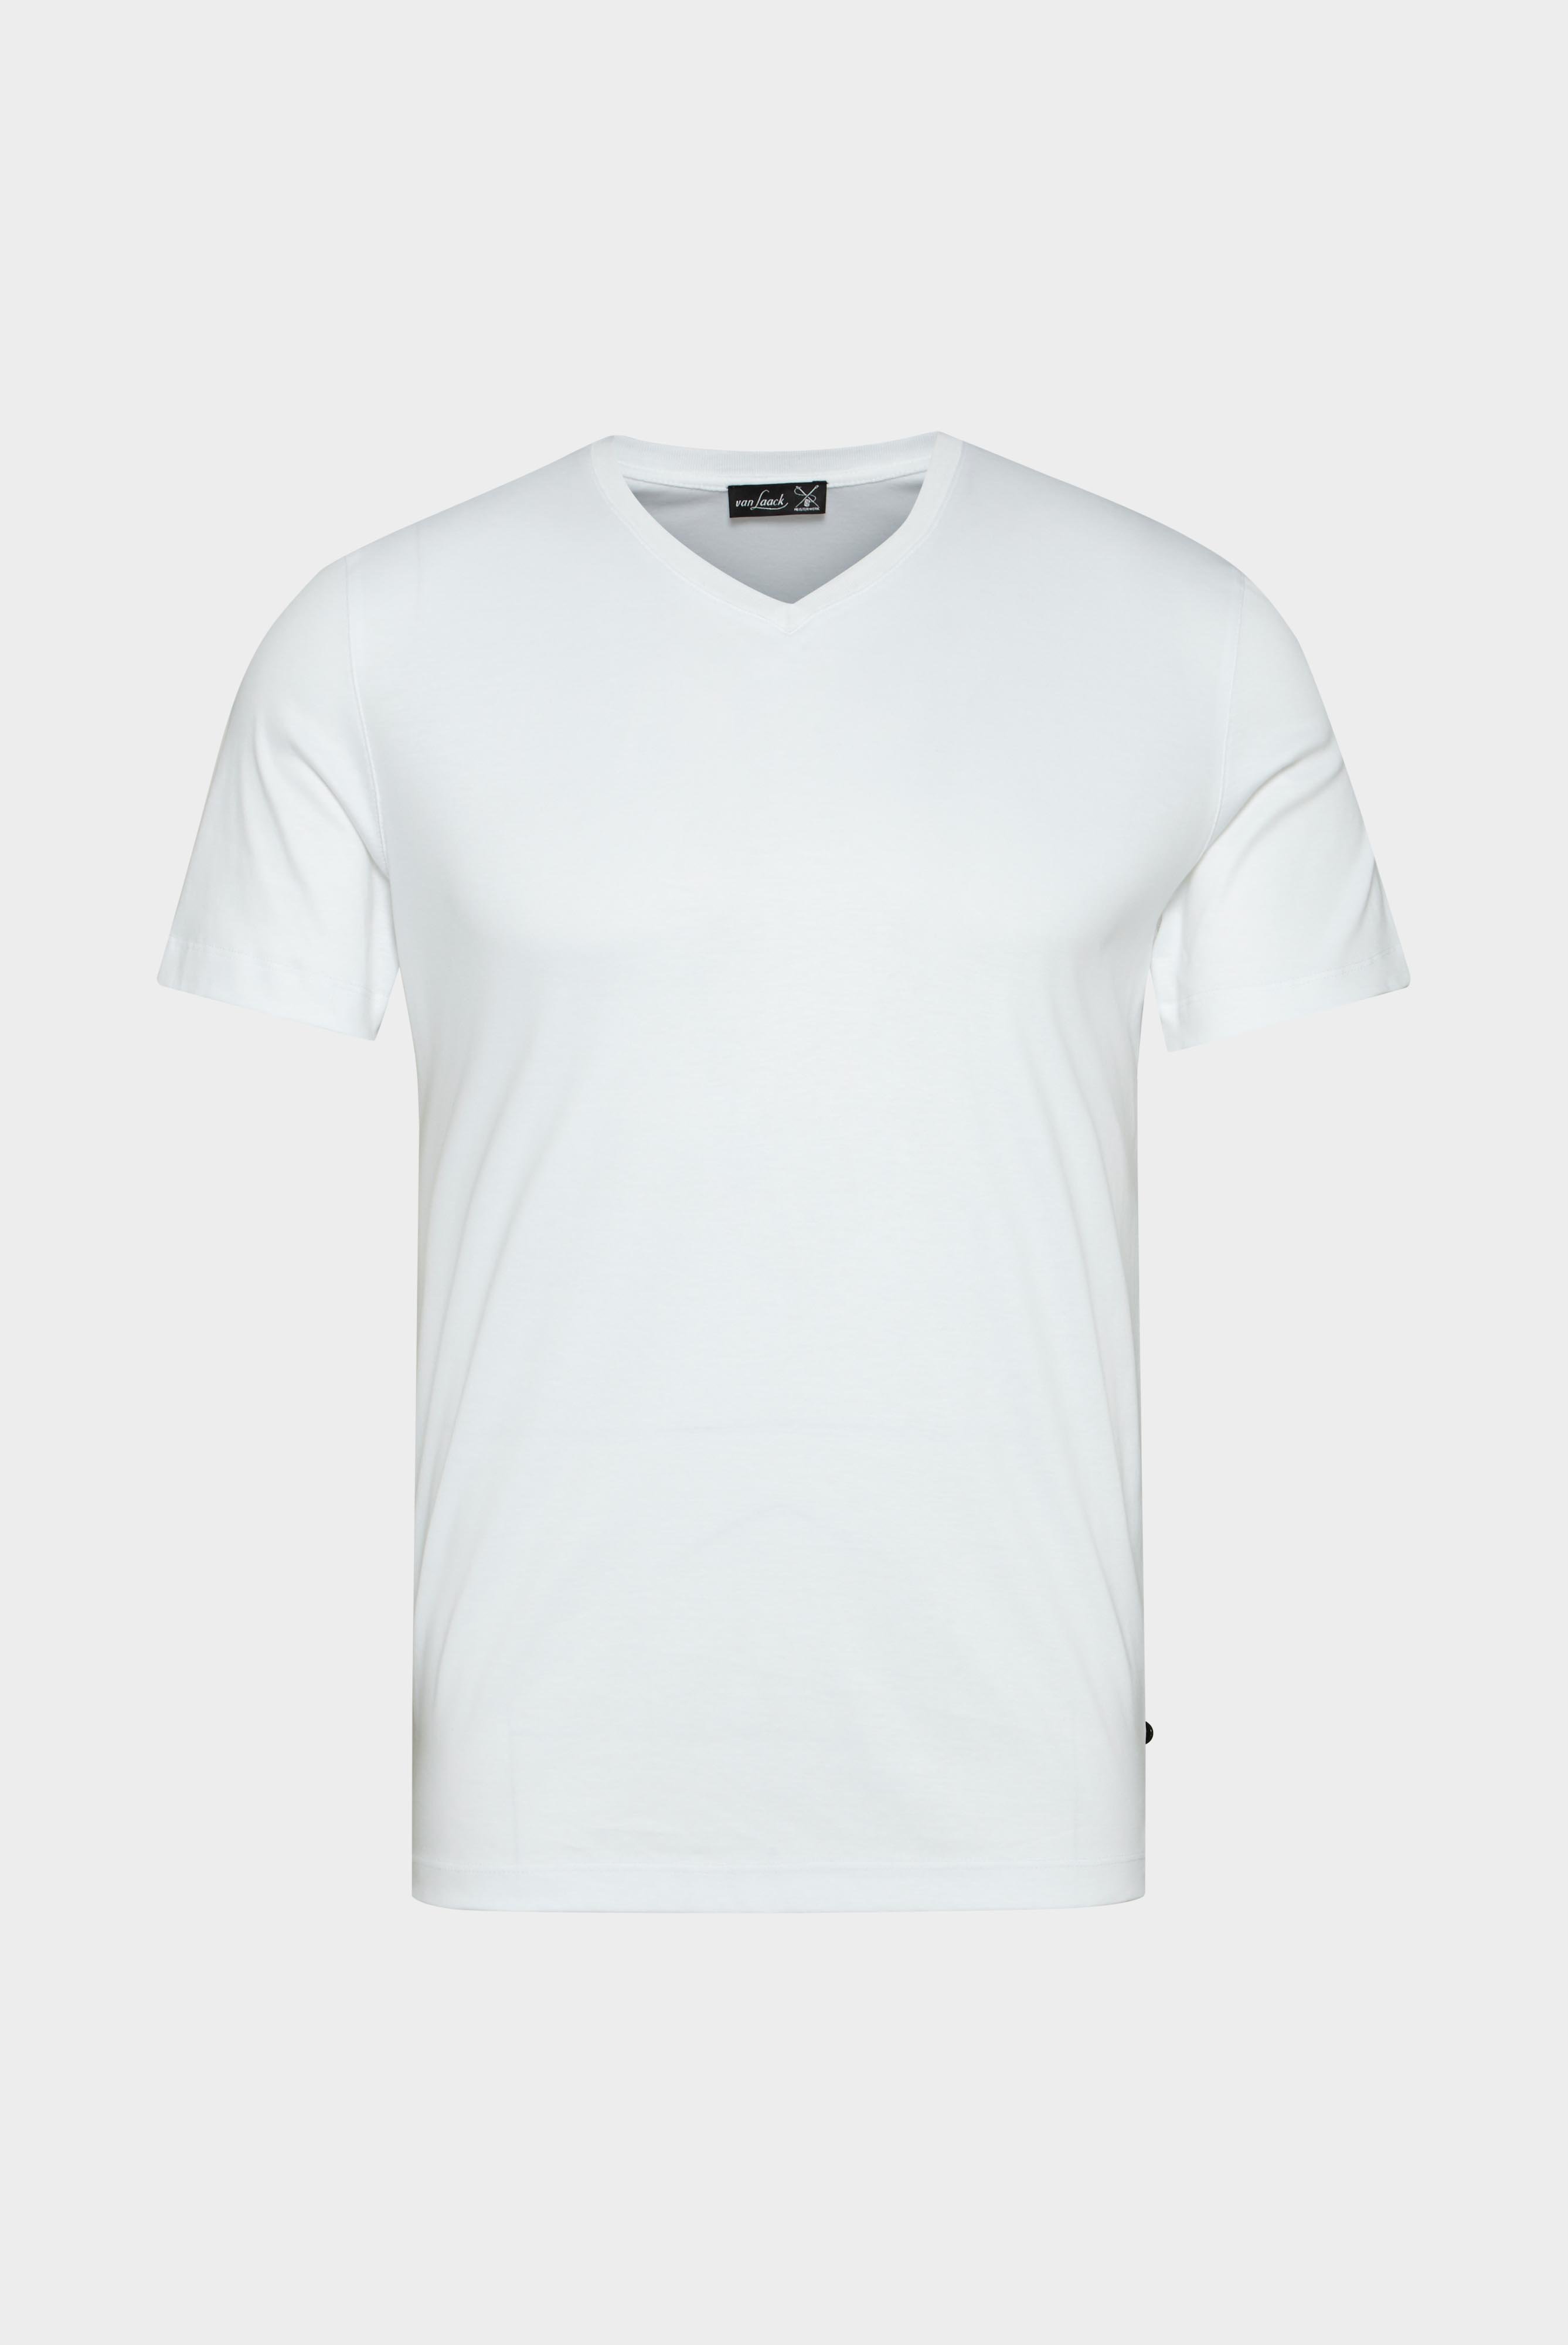 T-Shirts+Swiss Cotton Jersey V-Neck T-Shirt+20.1715.UX.180031.000.S